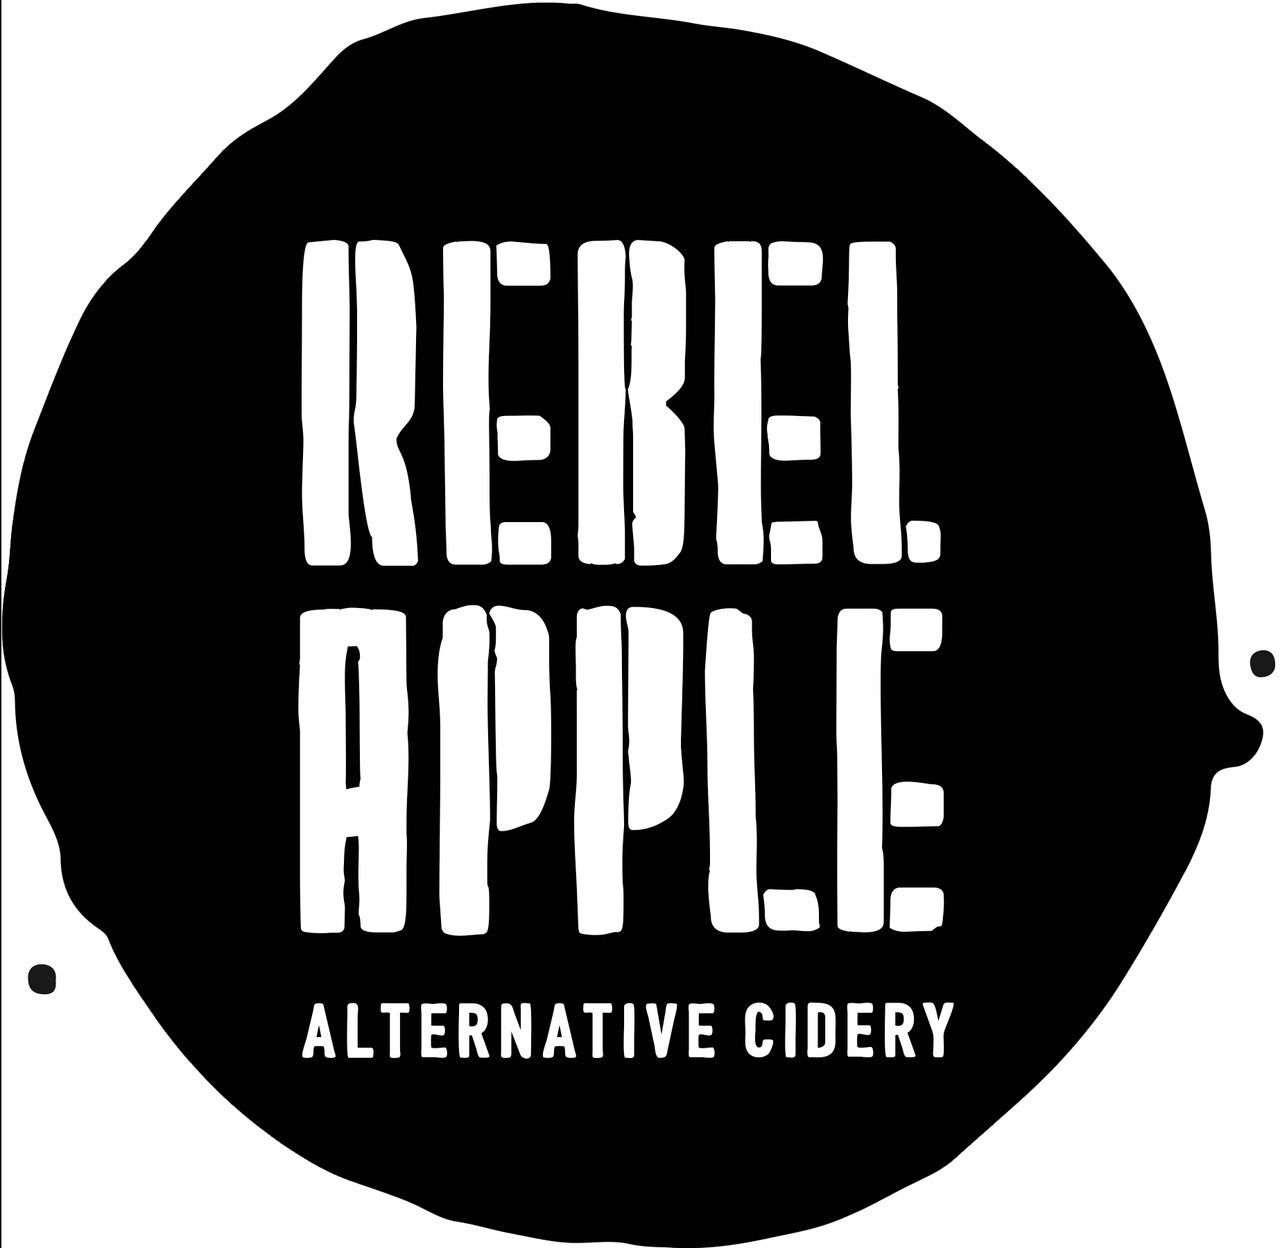 Rebel apple